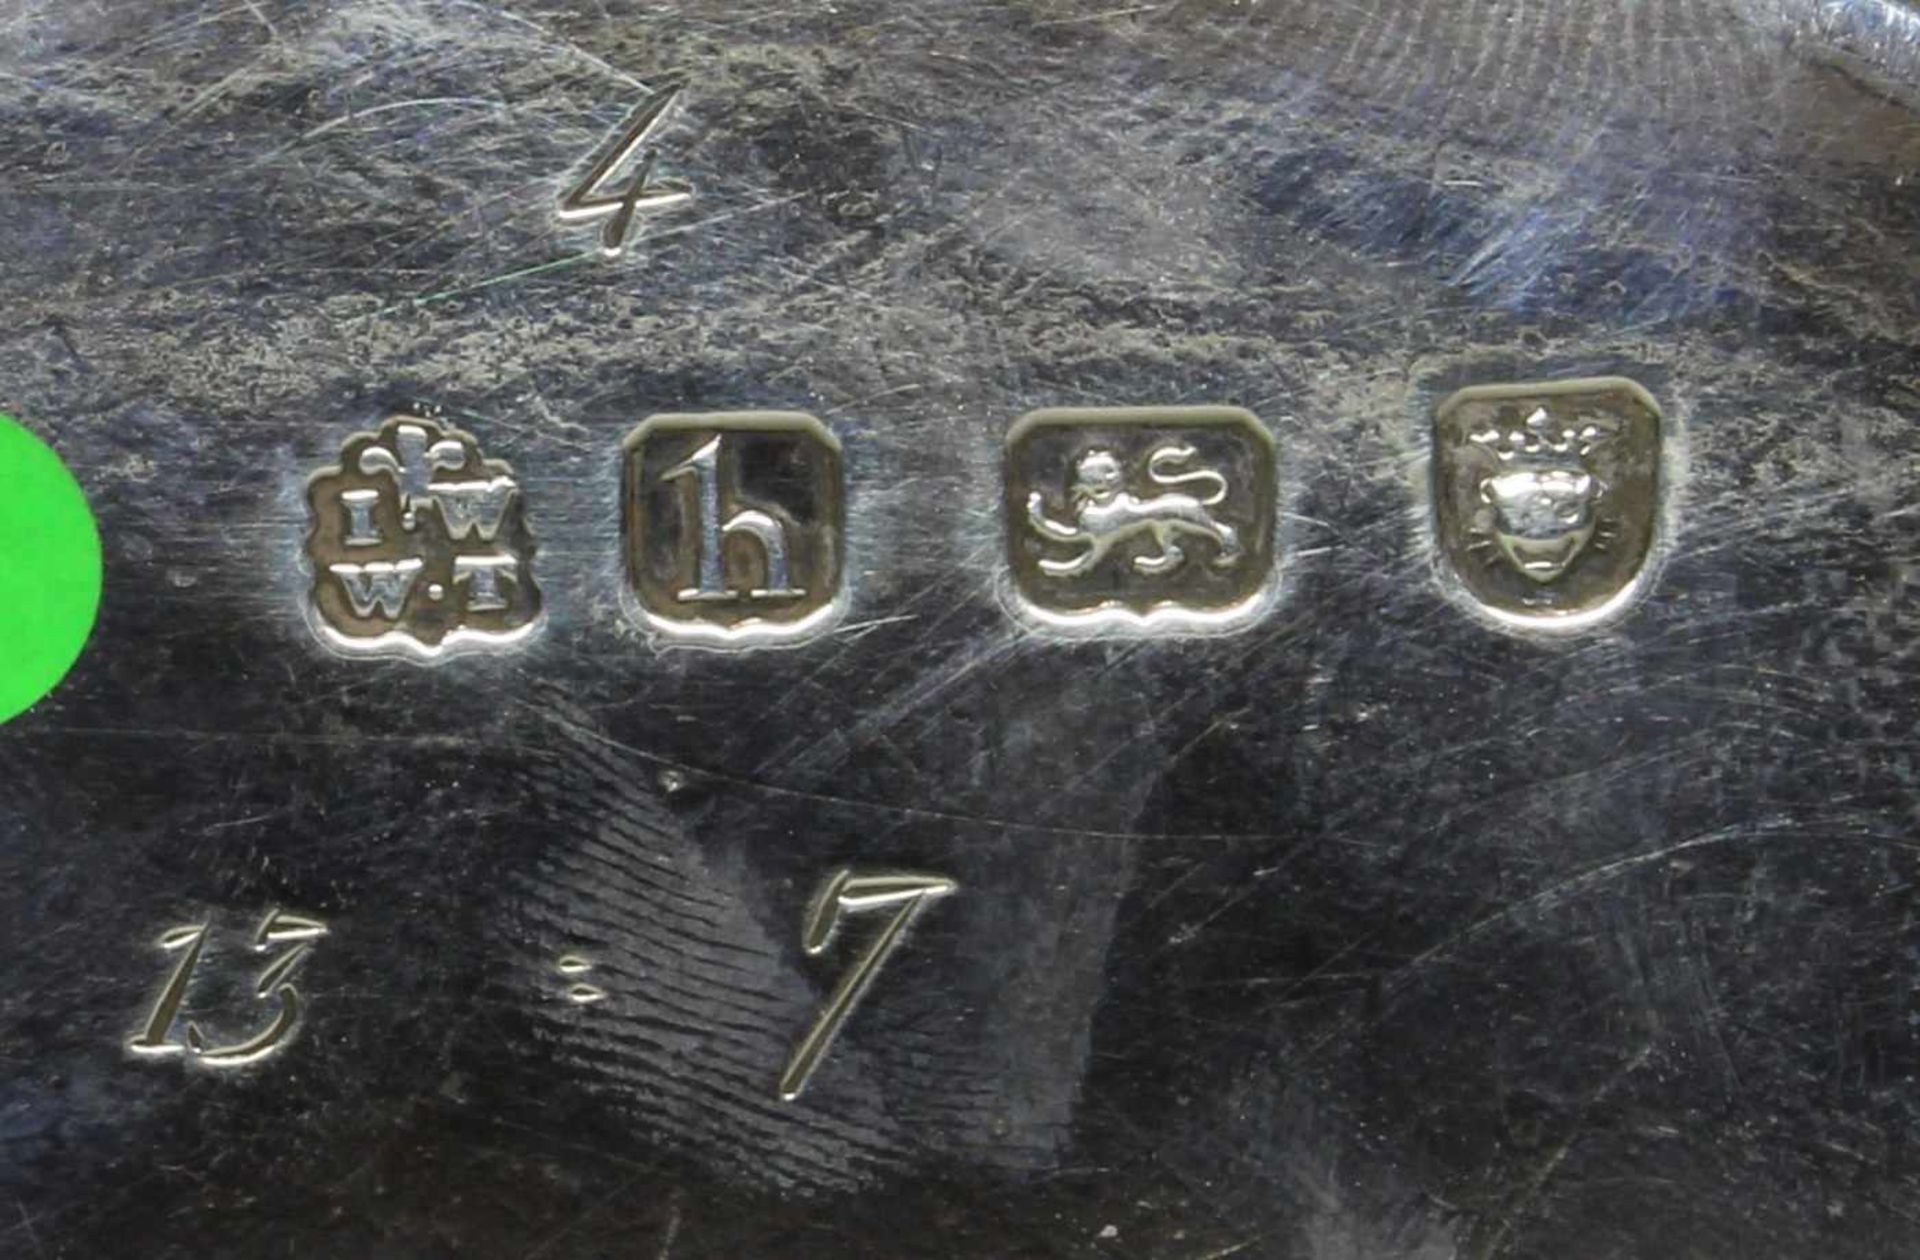 Salver, Silber 925, London, 1783, John Wakelin & William Taylor, oval, glatter Spiegel mit Emblem, - Image 5 of 6